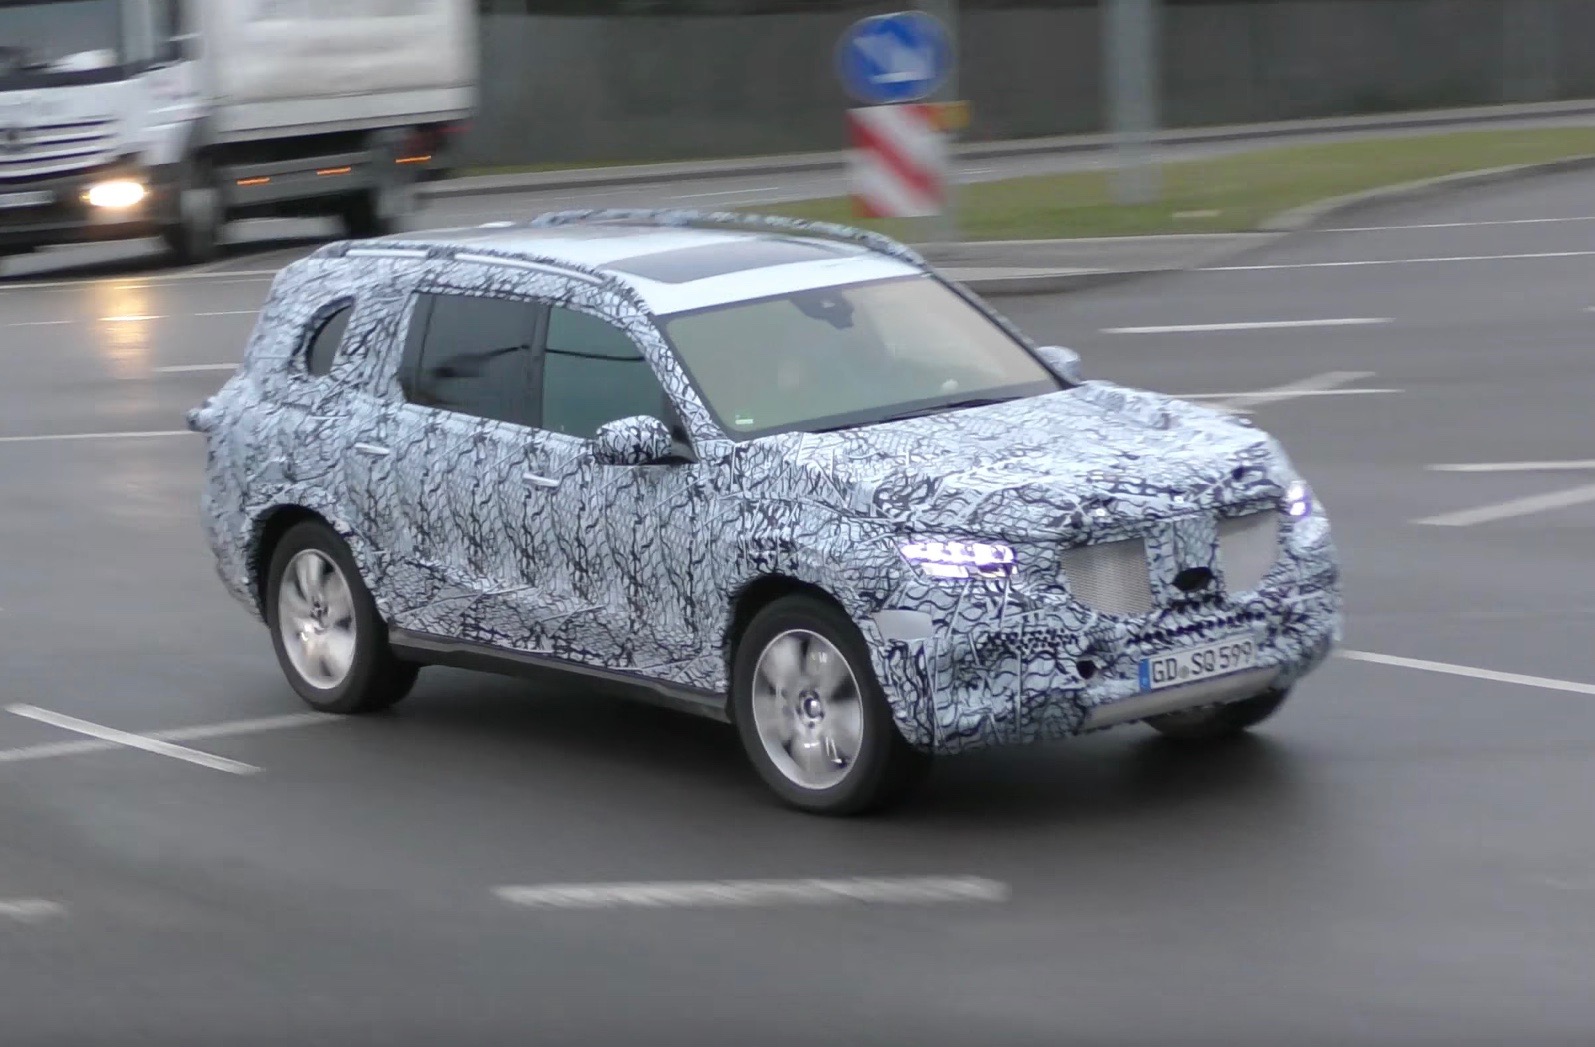 2019 Mercedes-Benz GLS (X167) spied, to adopt new MHA platform (video)